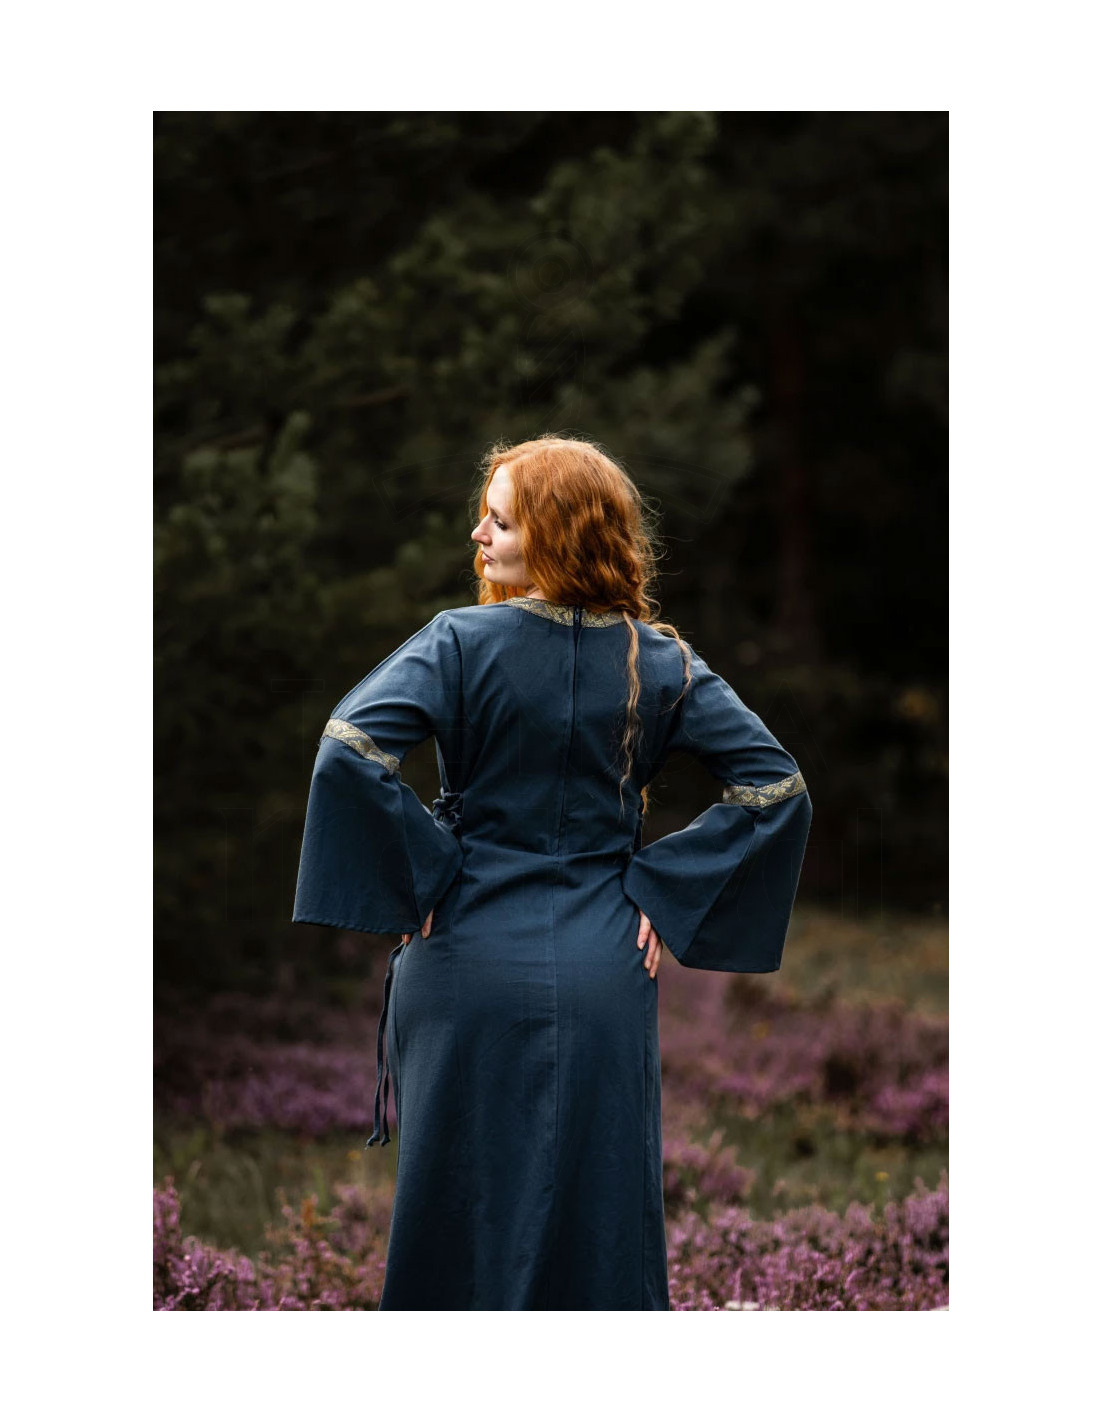 Vestido medieval mujer Azul ⚔️ Tienda-Medieval